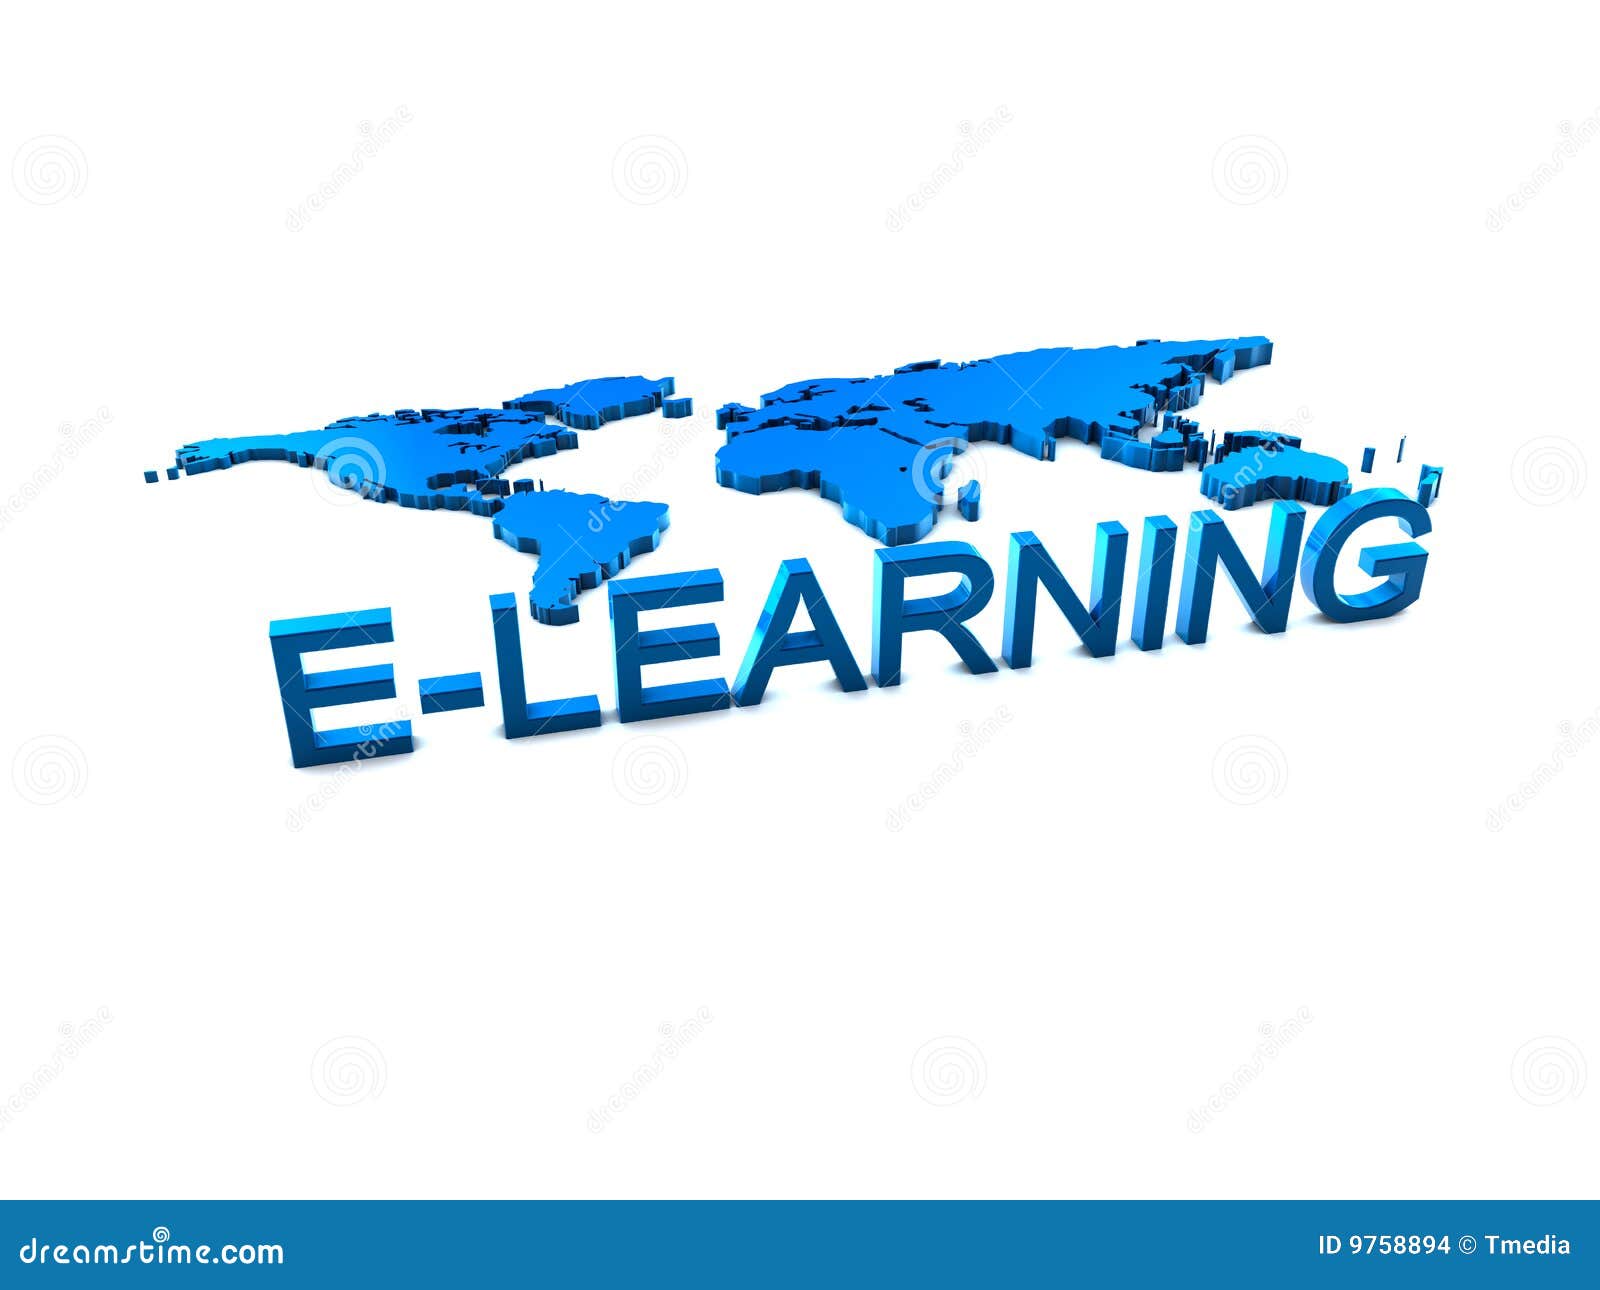 Elearning Logo For Education Stock Images - Image: 9758894